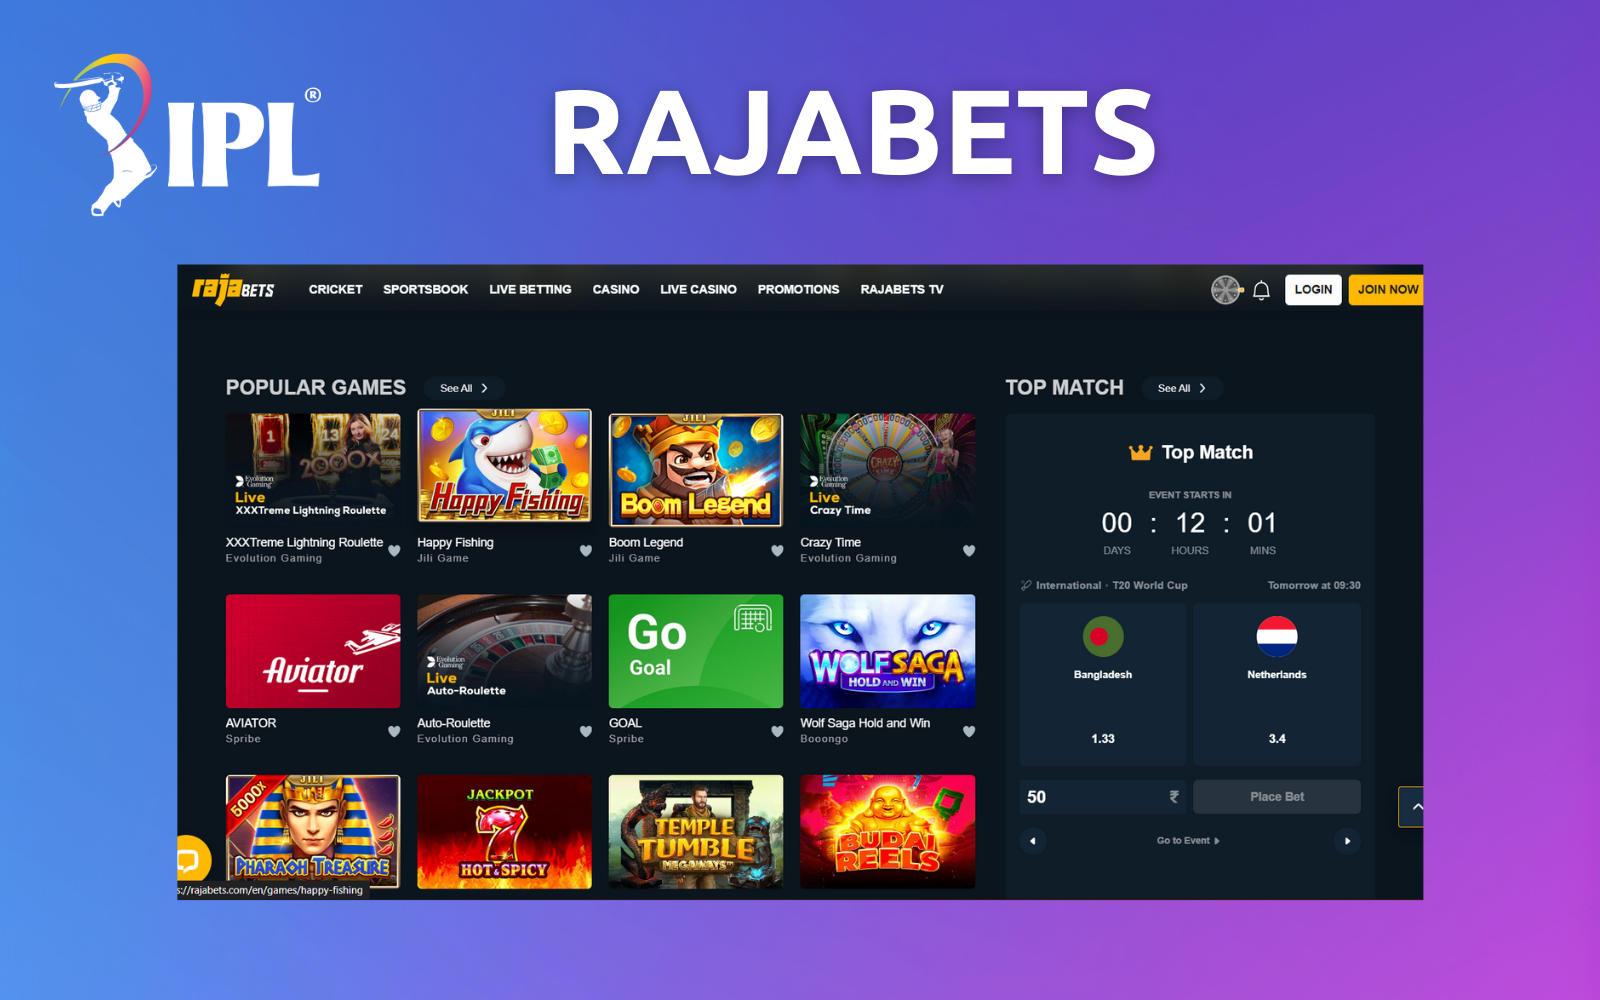 IPL Rajabets cricket betting website review